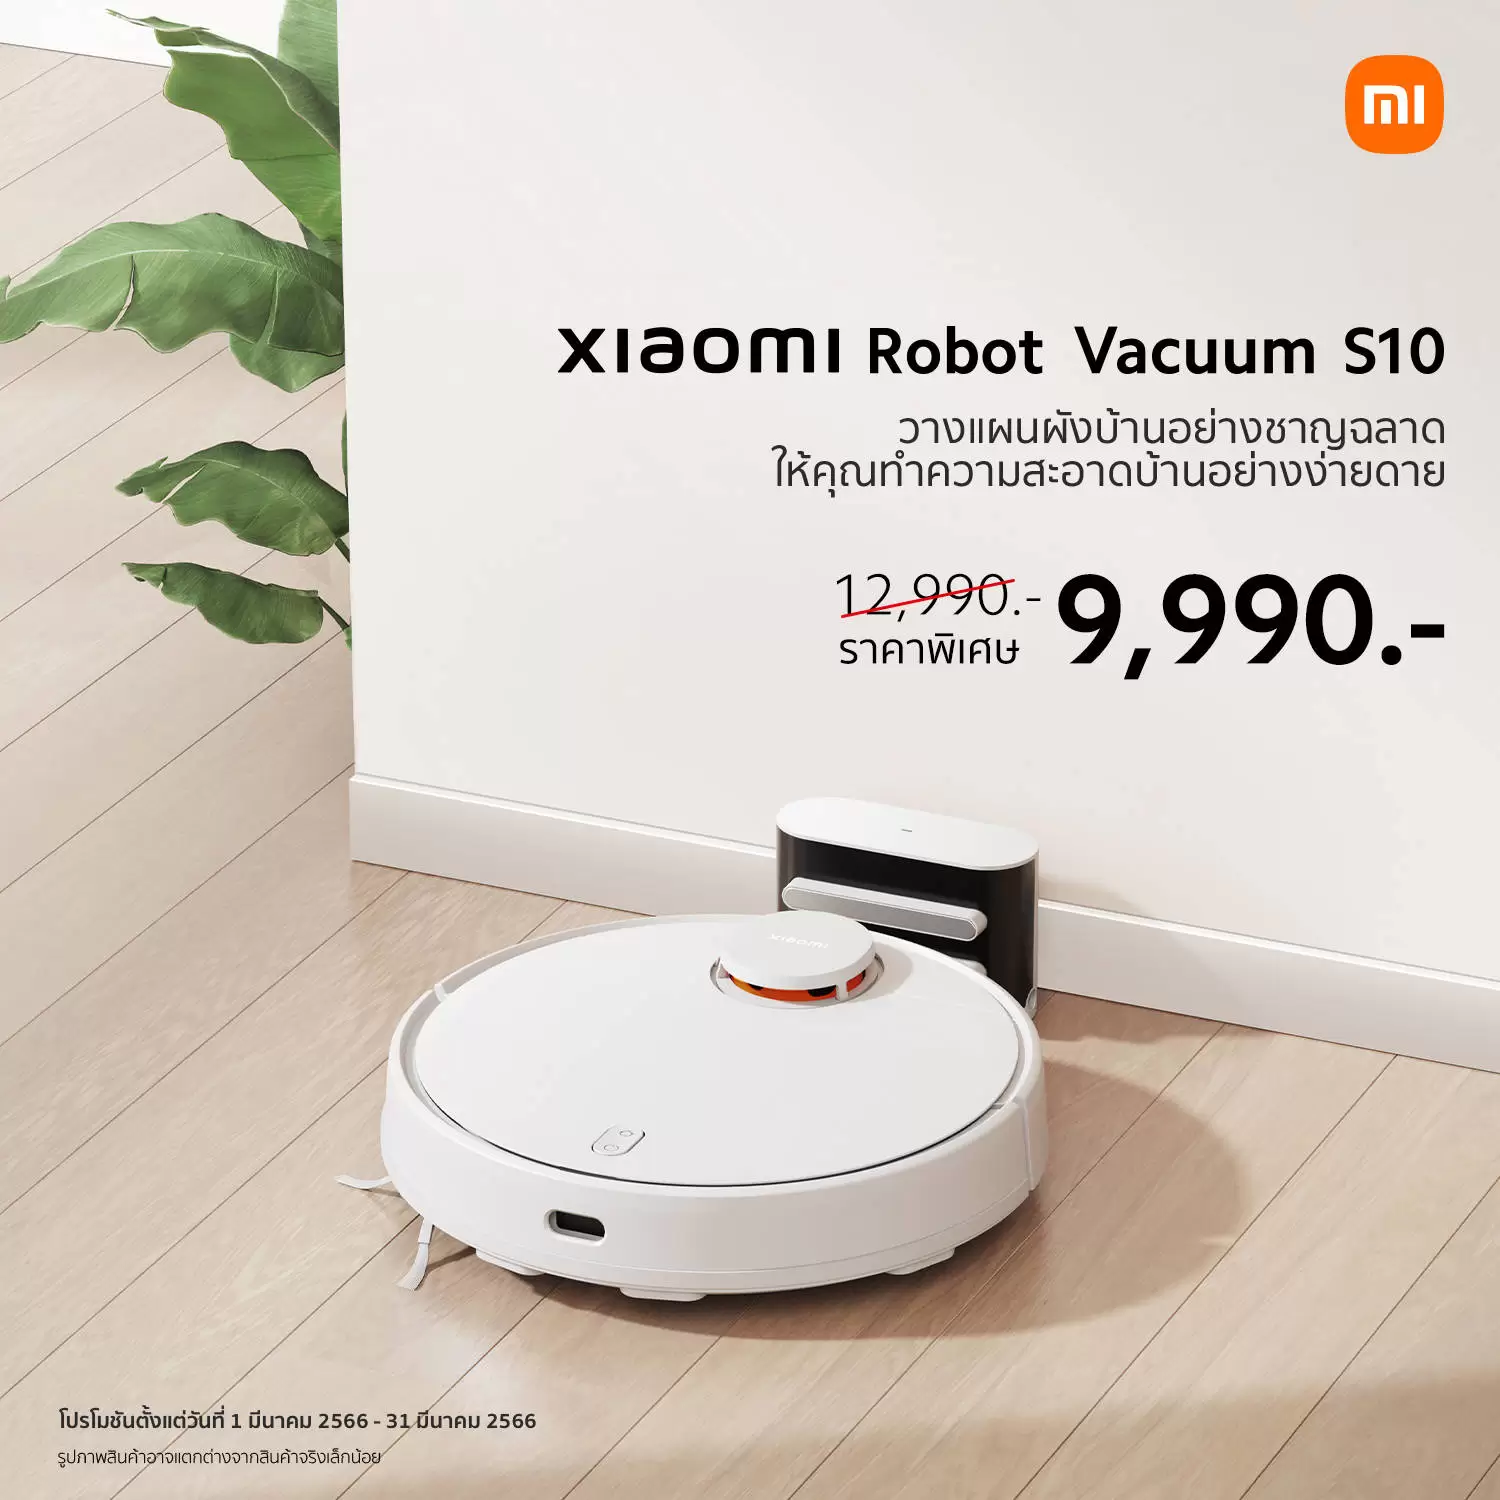 Xiaomi Robot Vacuum S10 KV 1 | Xiaomi | รวมข้อมูล AIoT รุ่นใหม่ของ Xiaomi นาฬิกา, หูฟัง และ หุ่นยนต์ดูดฝุ่น ราคาและโปรโมชั่น